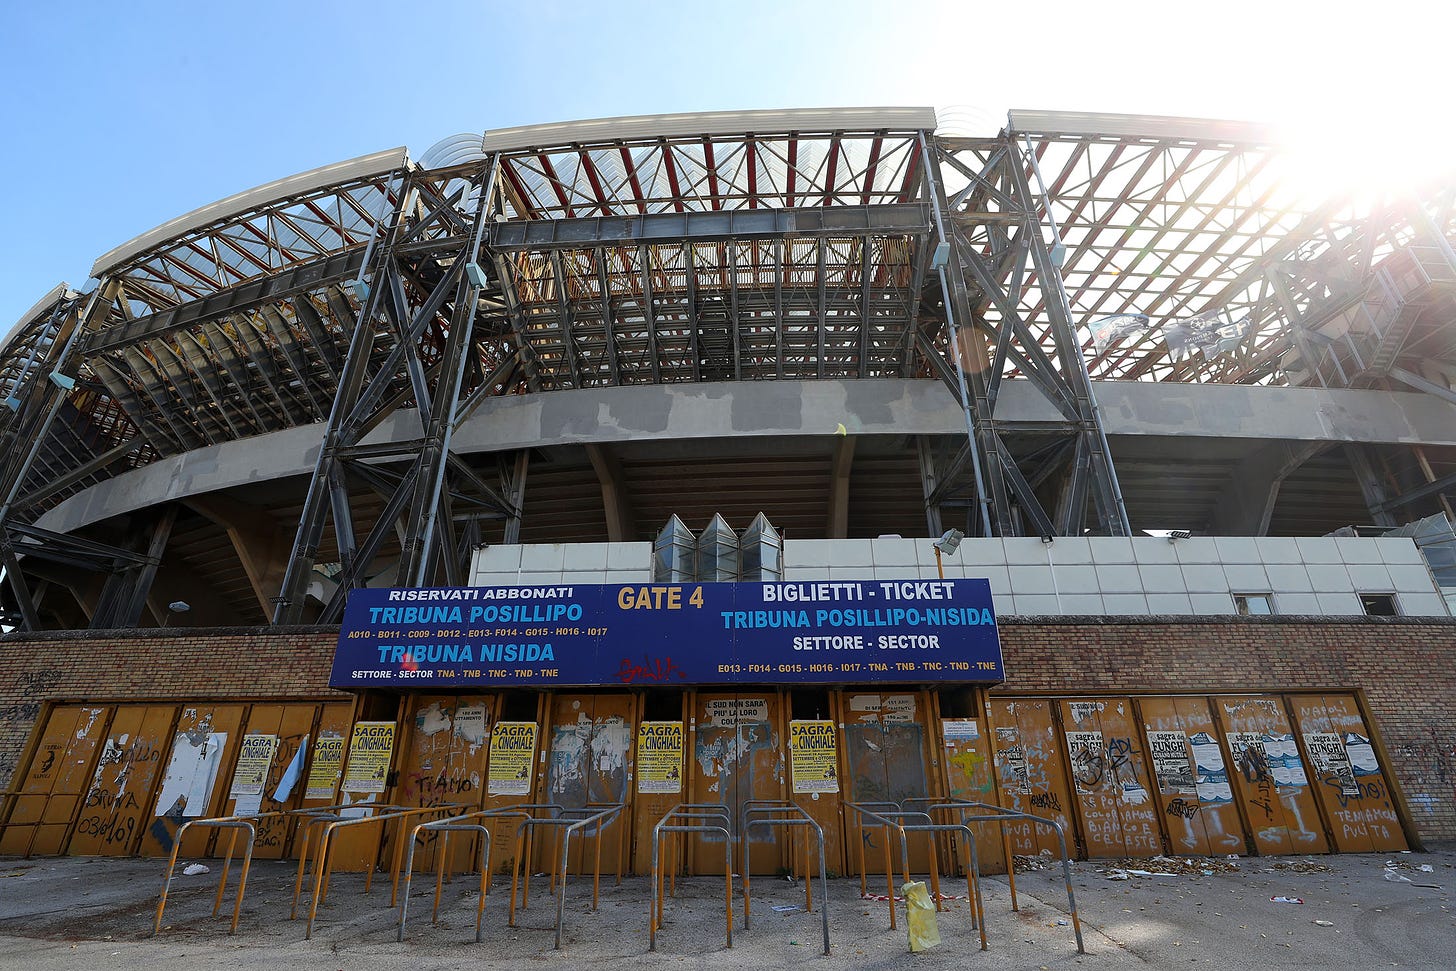 Italian Soccer's Old Stadiums, Empty Seats Seek Bailout - Bloomberg